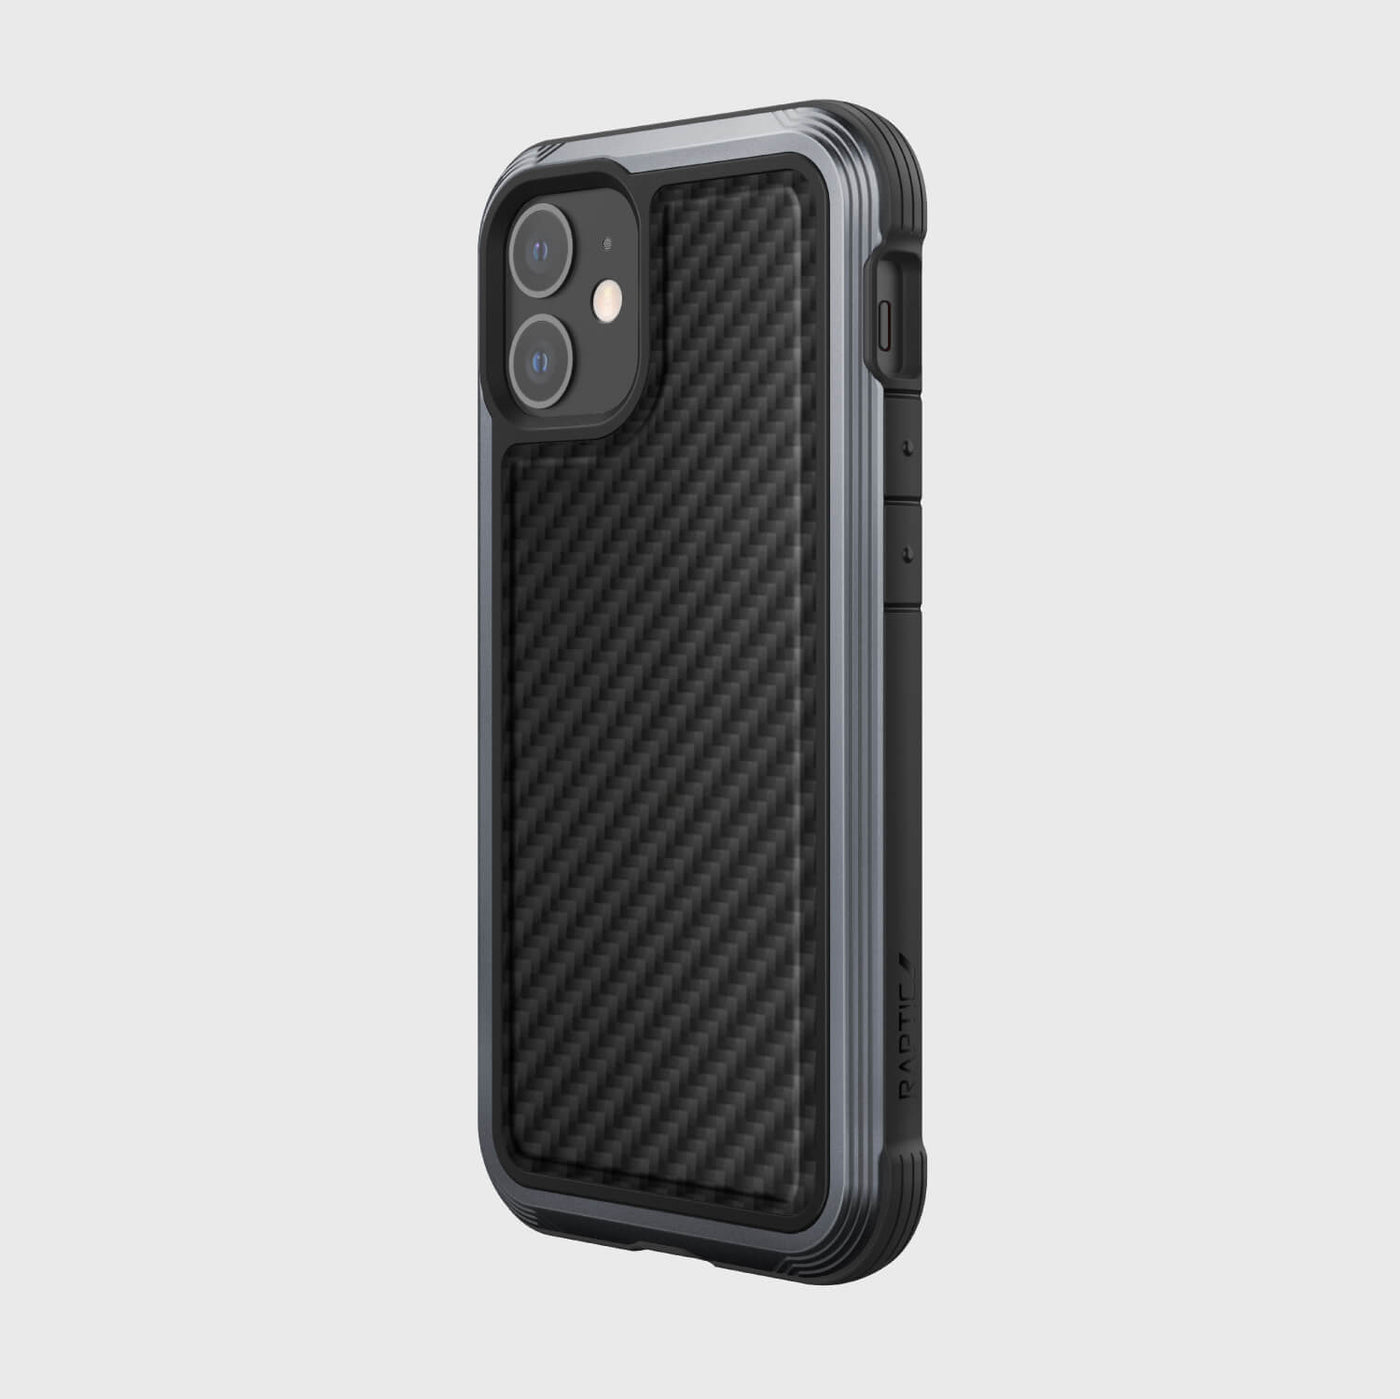 Luxurious Case for iPhone 12 Mini. Raptic Lux in black carbon fiber.